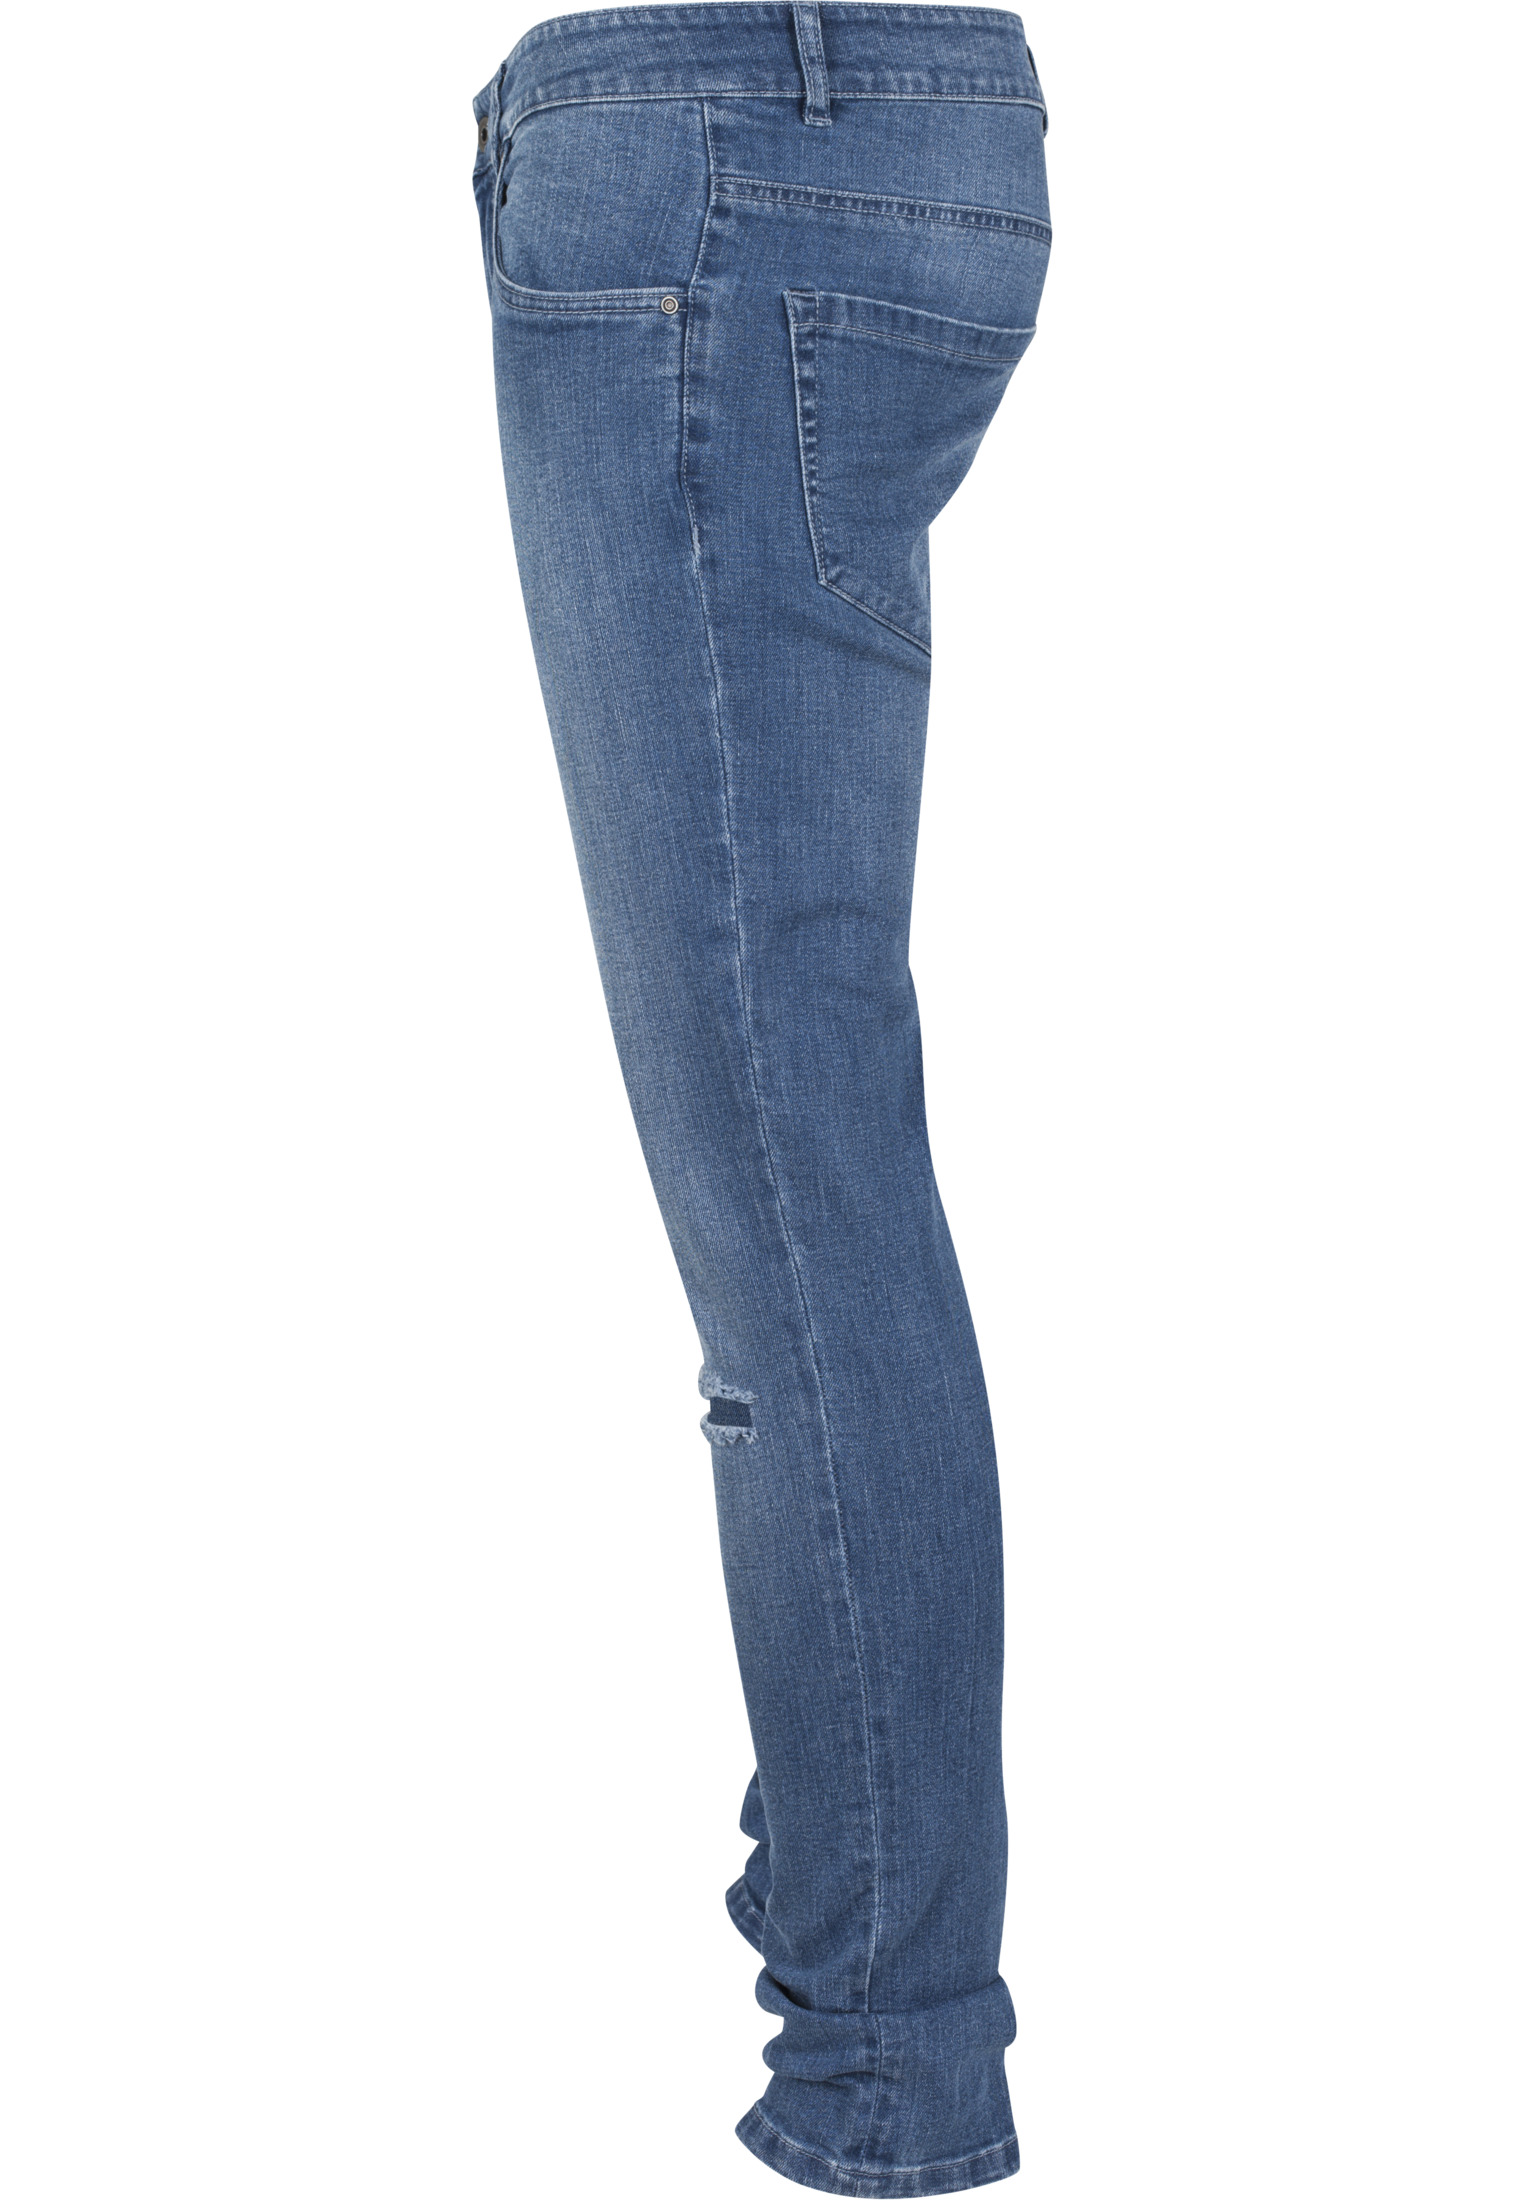 Hosen Slim Fit Knee Cut Denim Pants in Farbe blue washed